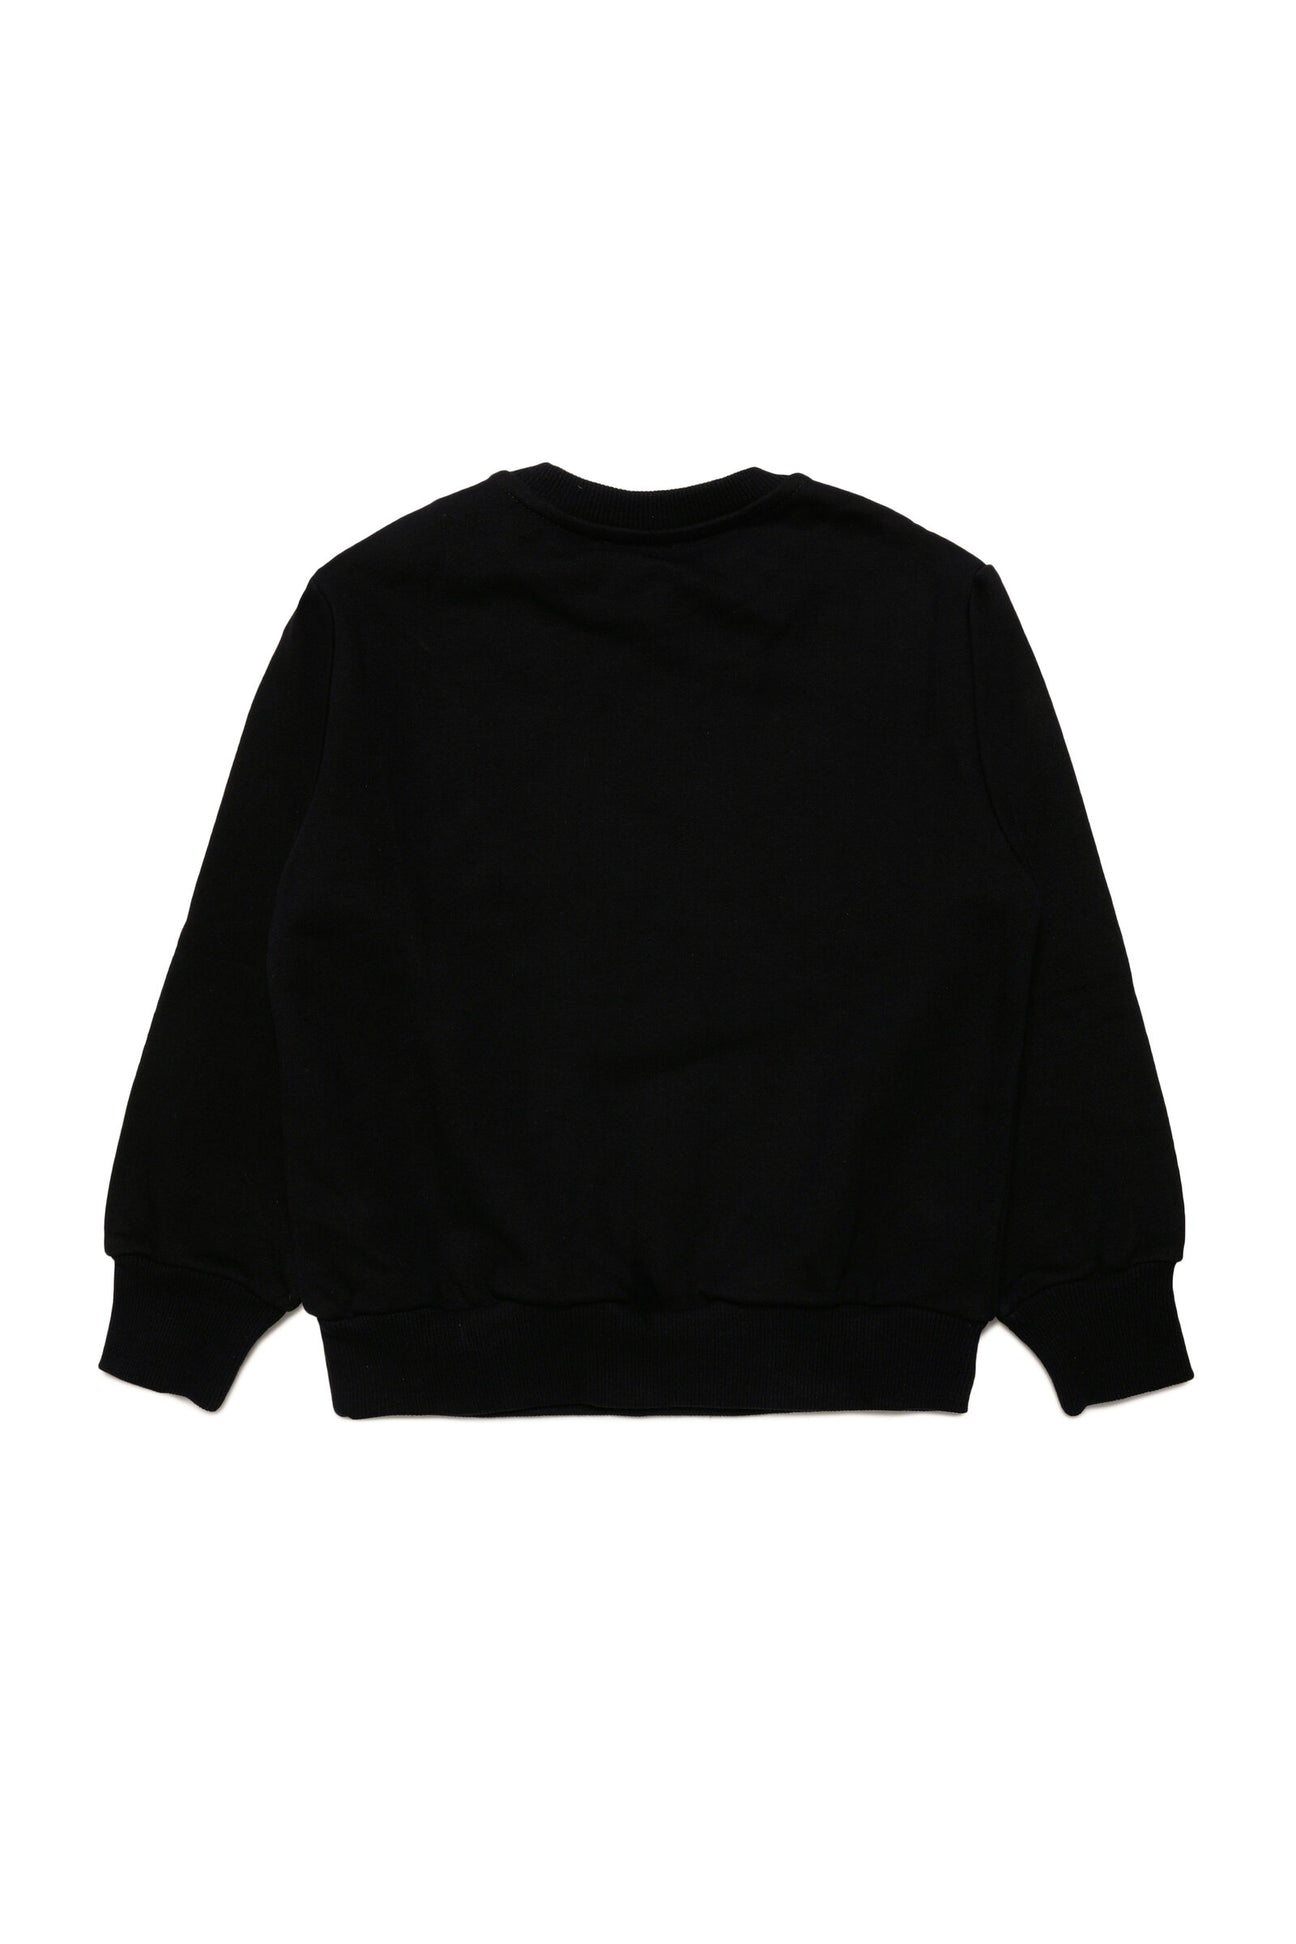 Black sweatshirt with Diesel logo applique Black sweatshirt with Diesel logo applique